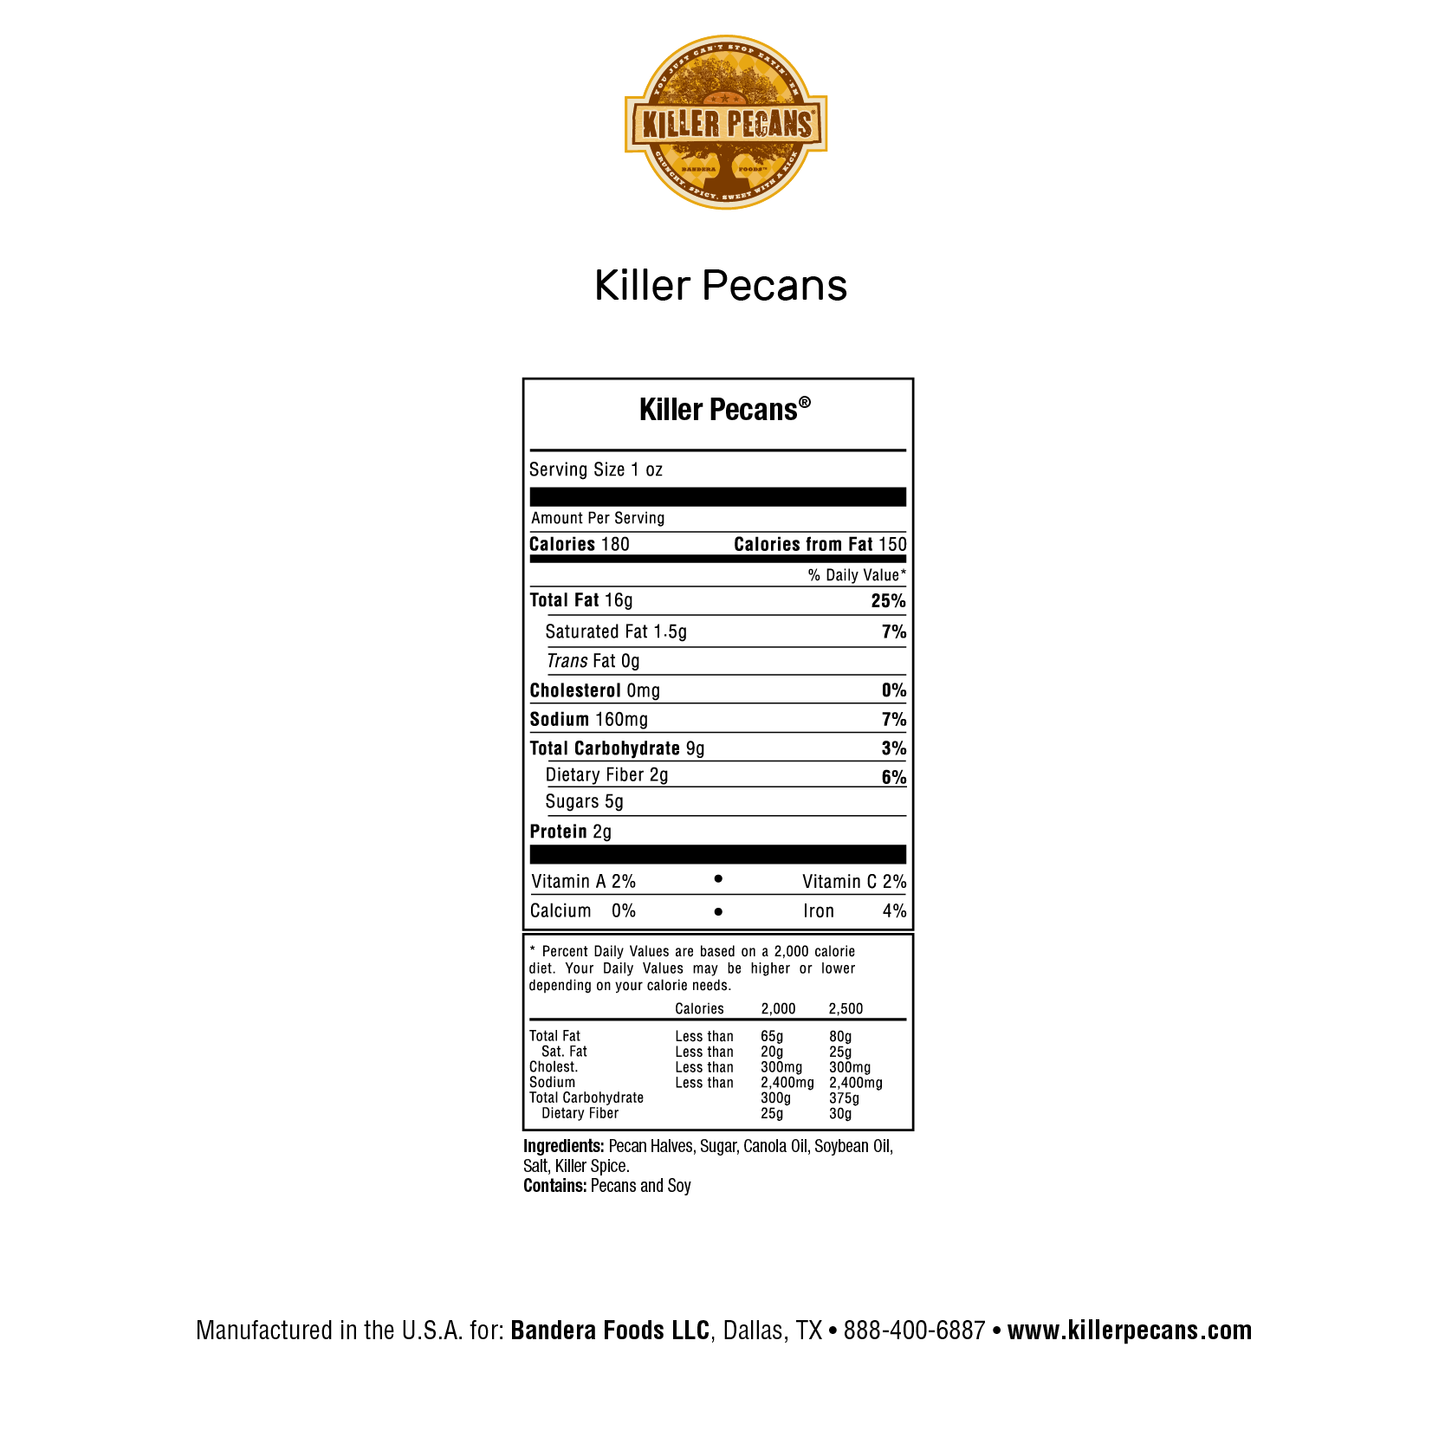 Texas Trio Tin – 5 oz Killer Pecans, 5 oz Cinnamon Pecans and 7 oz Dark Chocolate Dipped Killer Pecans. Nutrition Panel